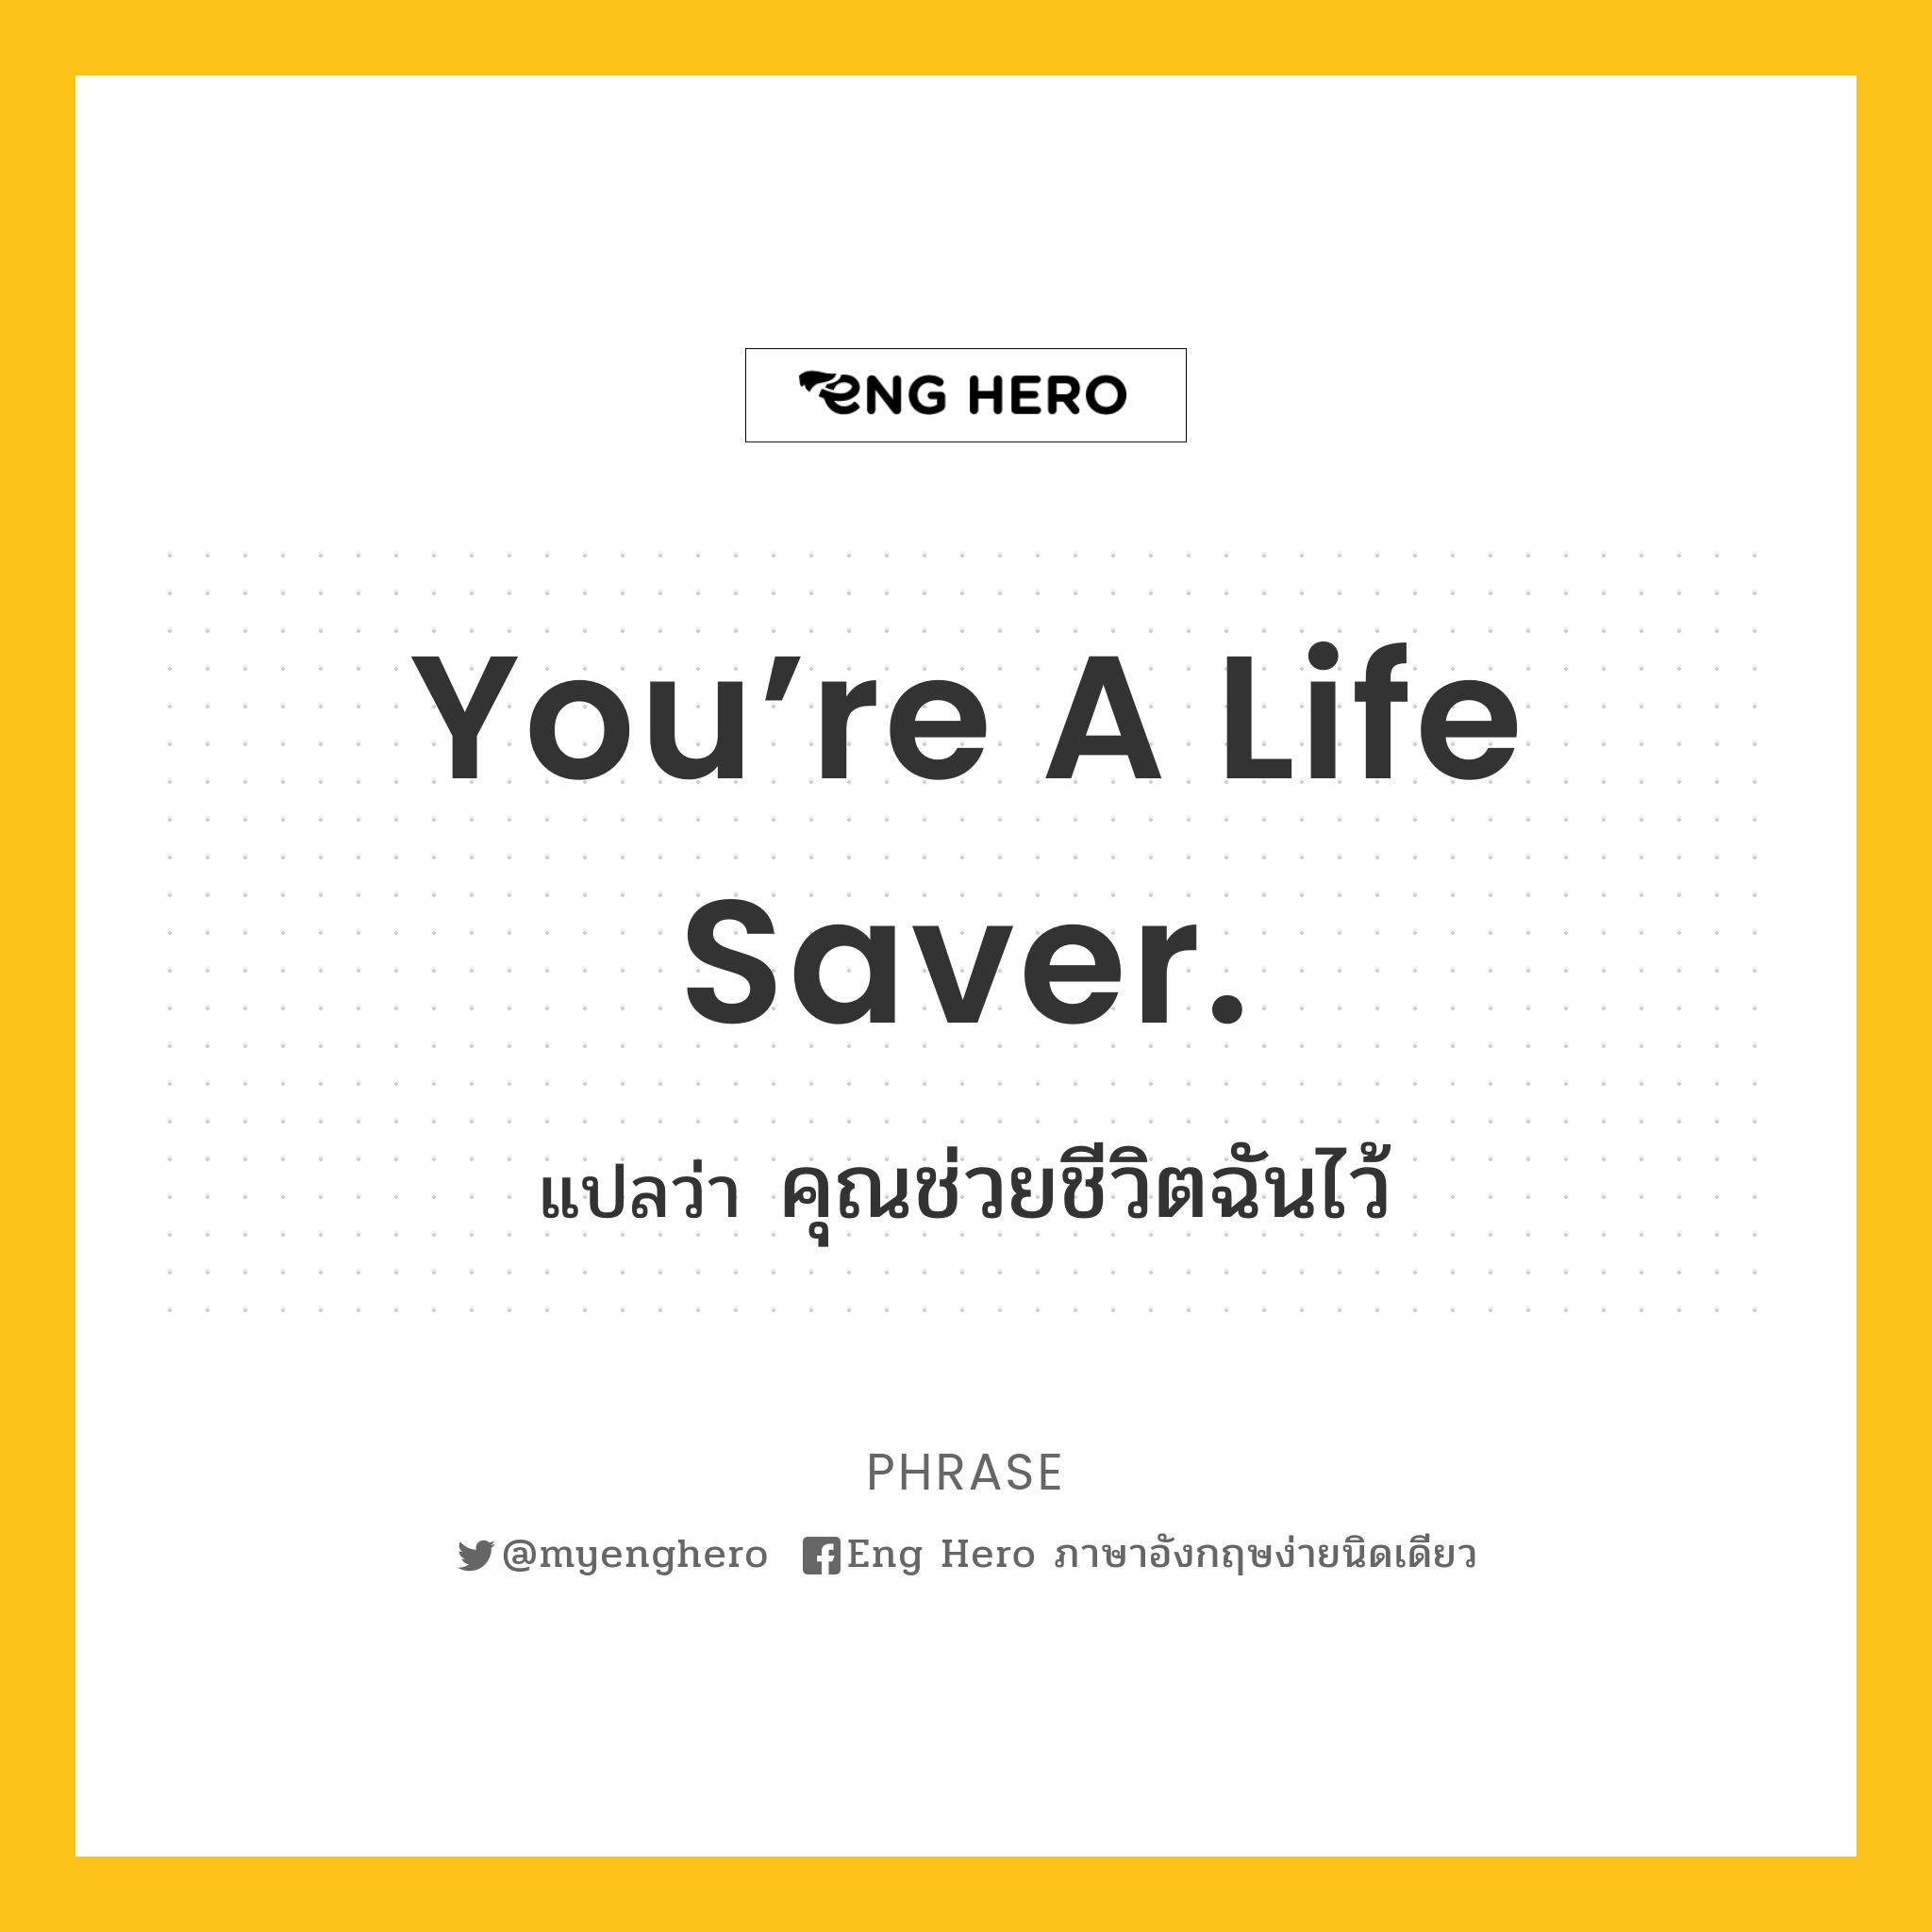 You’re a life saver.